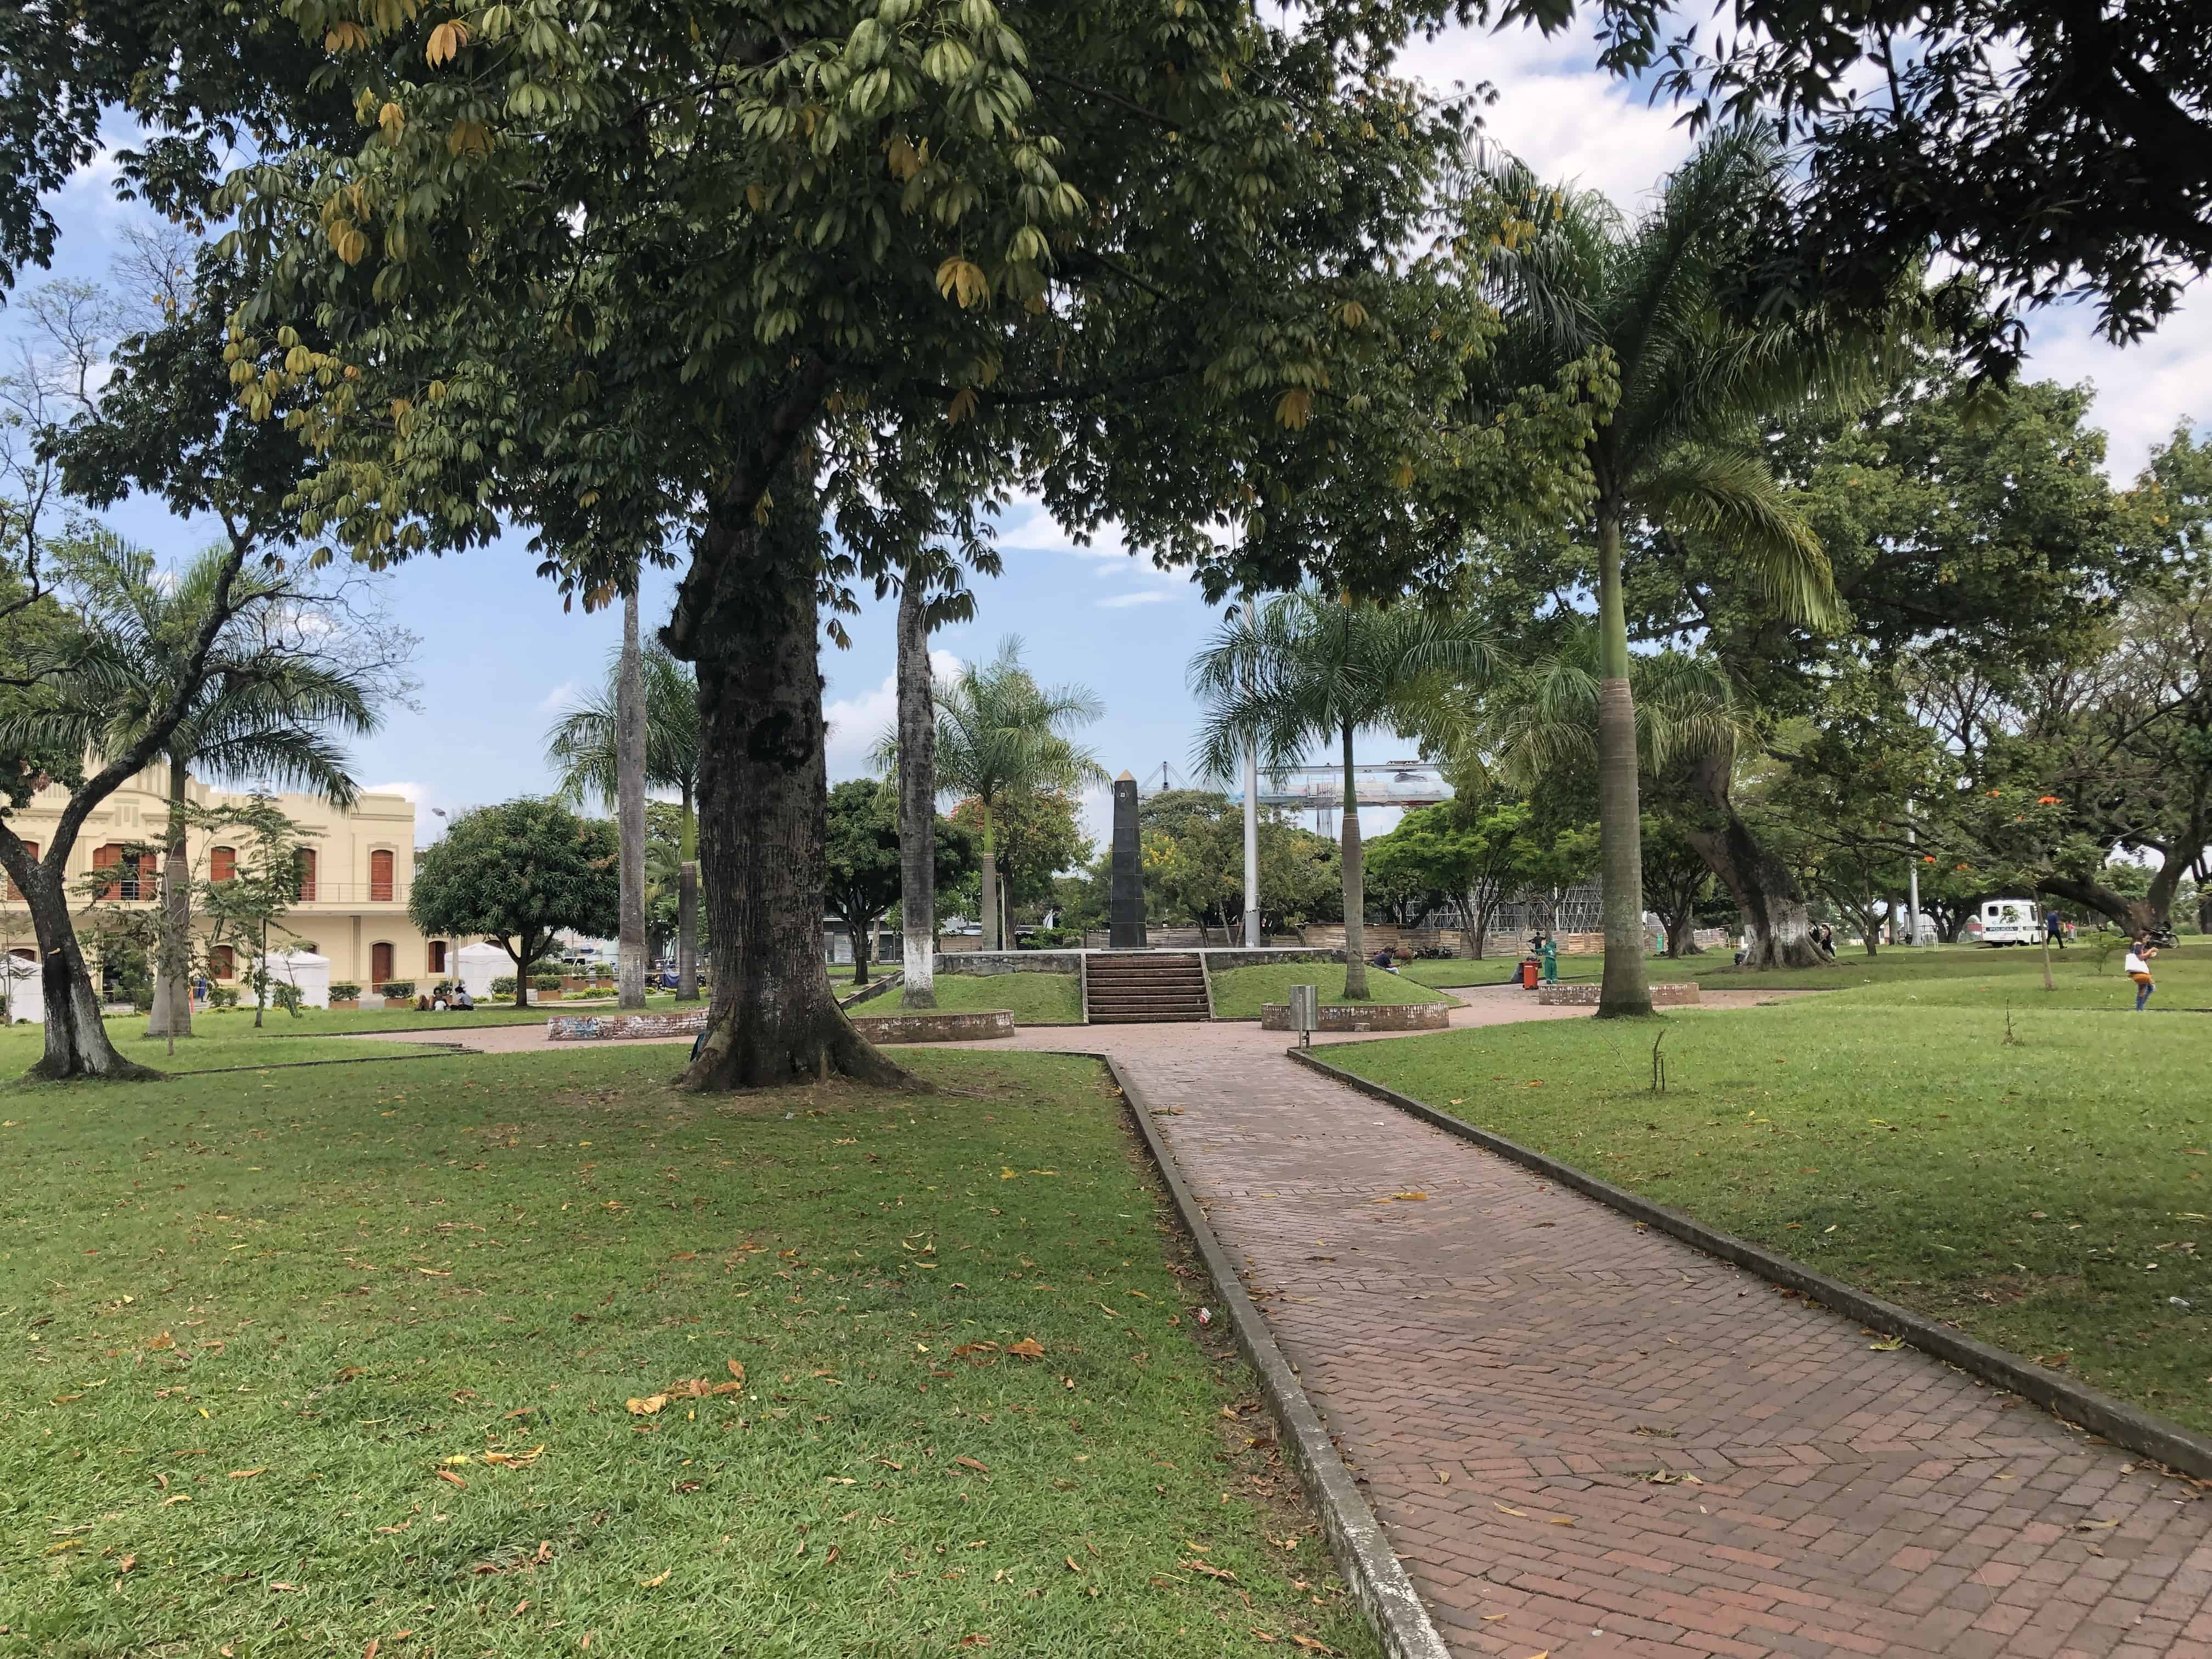 Parque Olaya Herrera